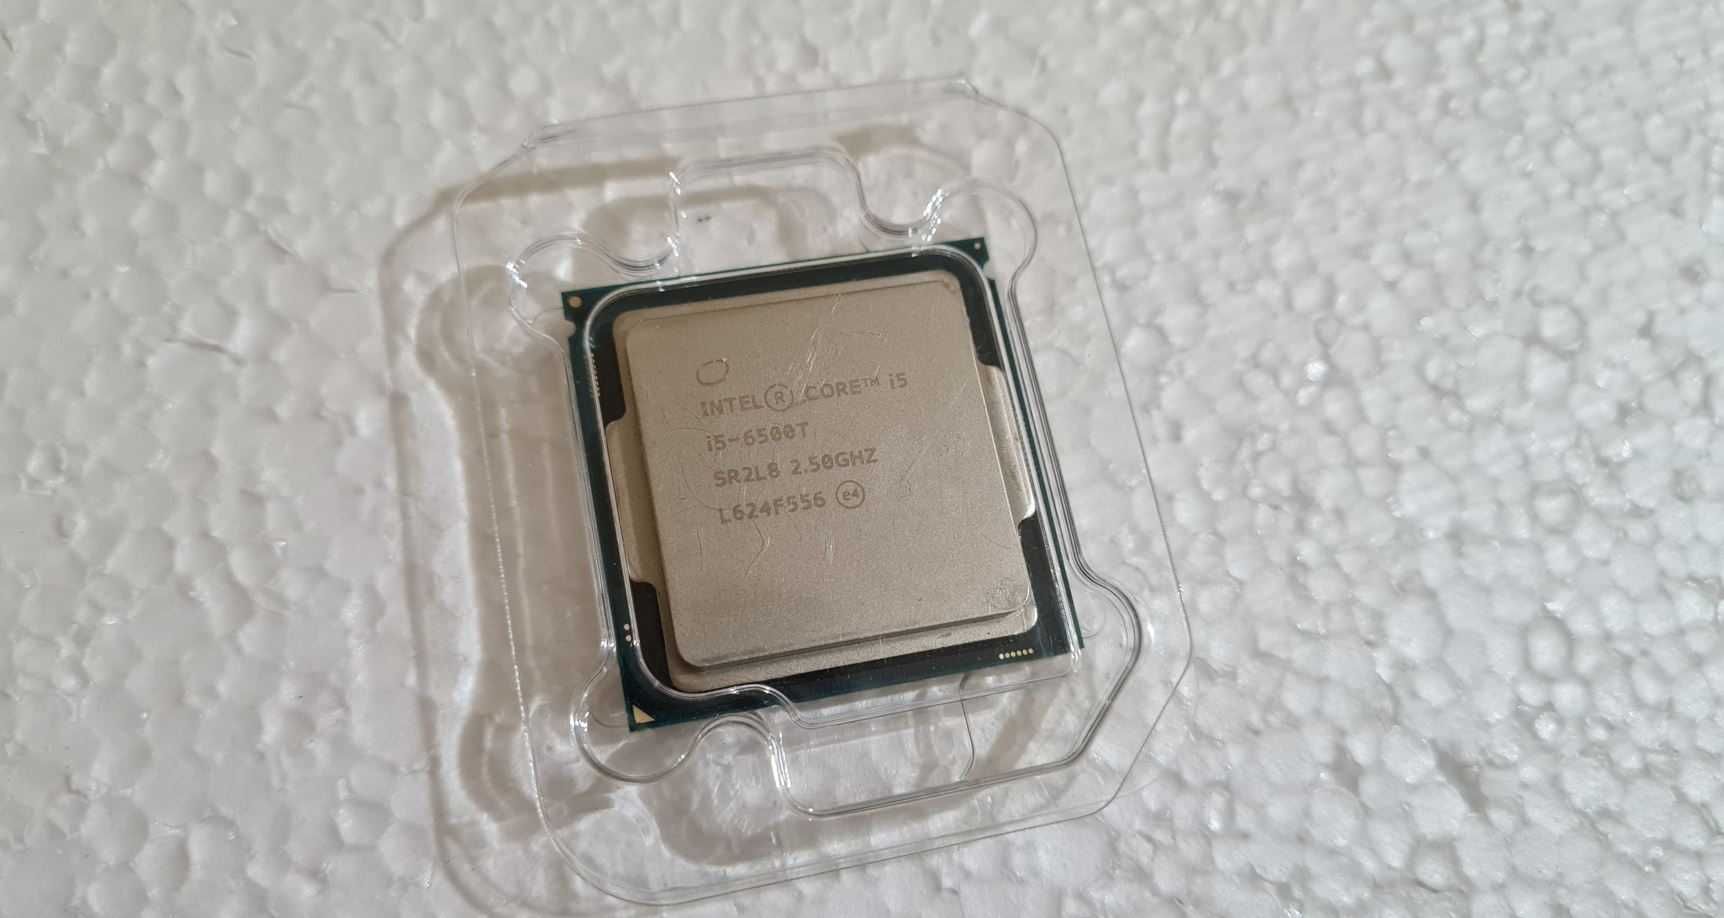 Procesor Intel Core i5-6500T,2,50Ghz Turbo 3,10Ghz,6MB,Sk 1151,Gen6